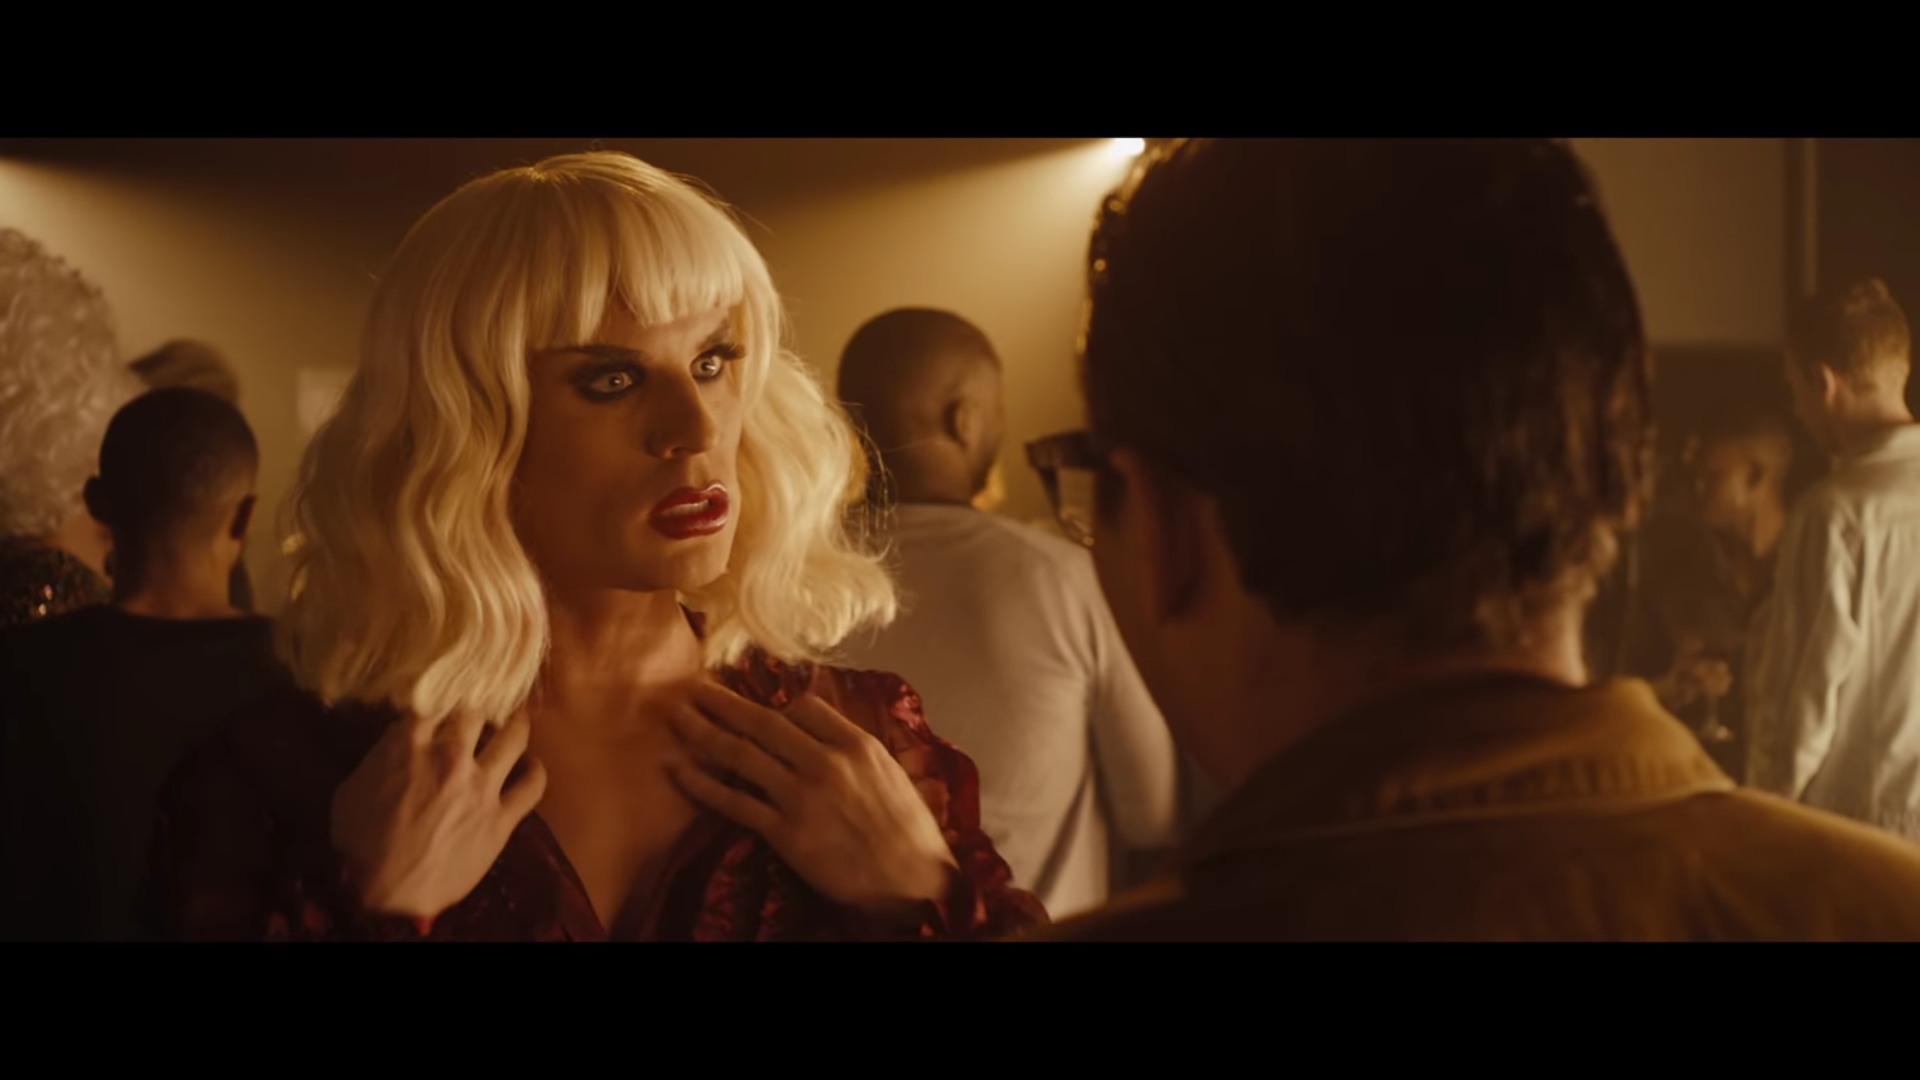 A man talks to a blonde drag queen at a bar.